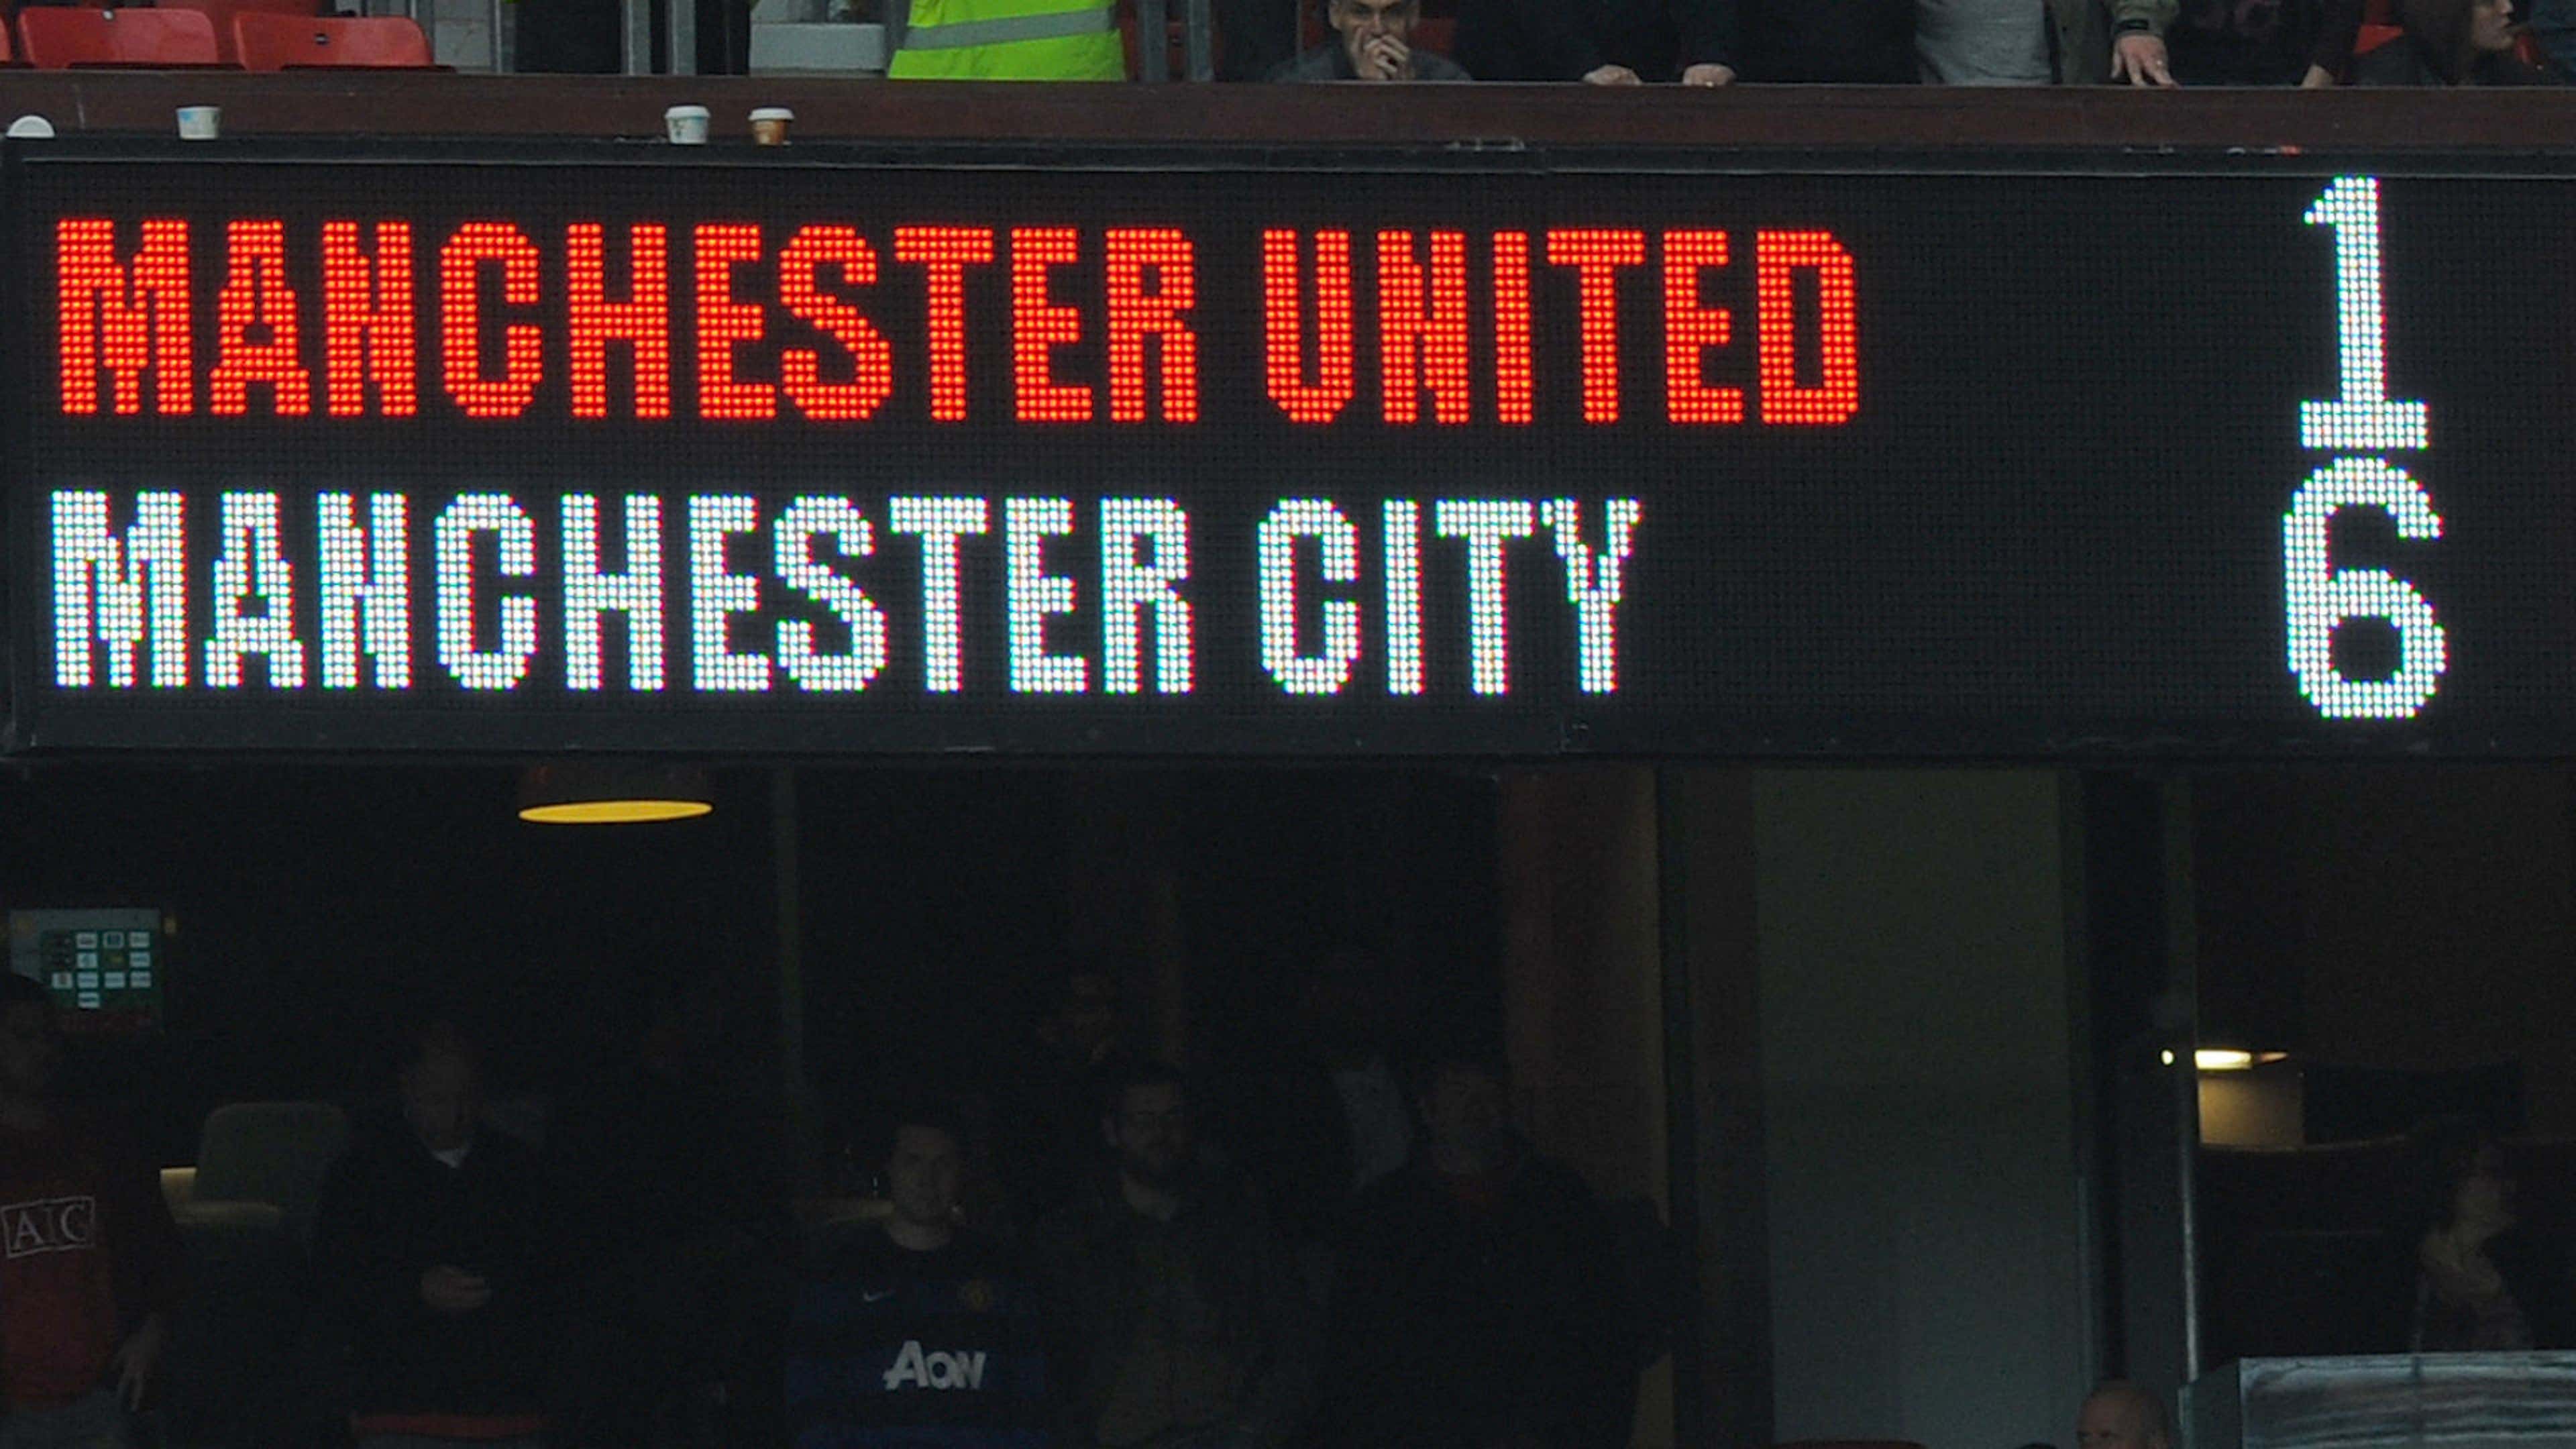 Manchester United City scoreboard